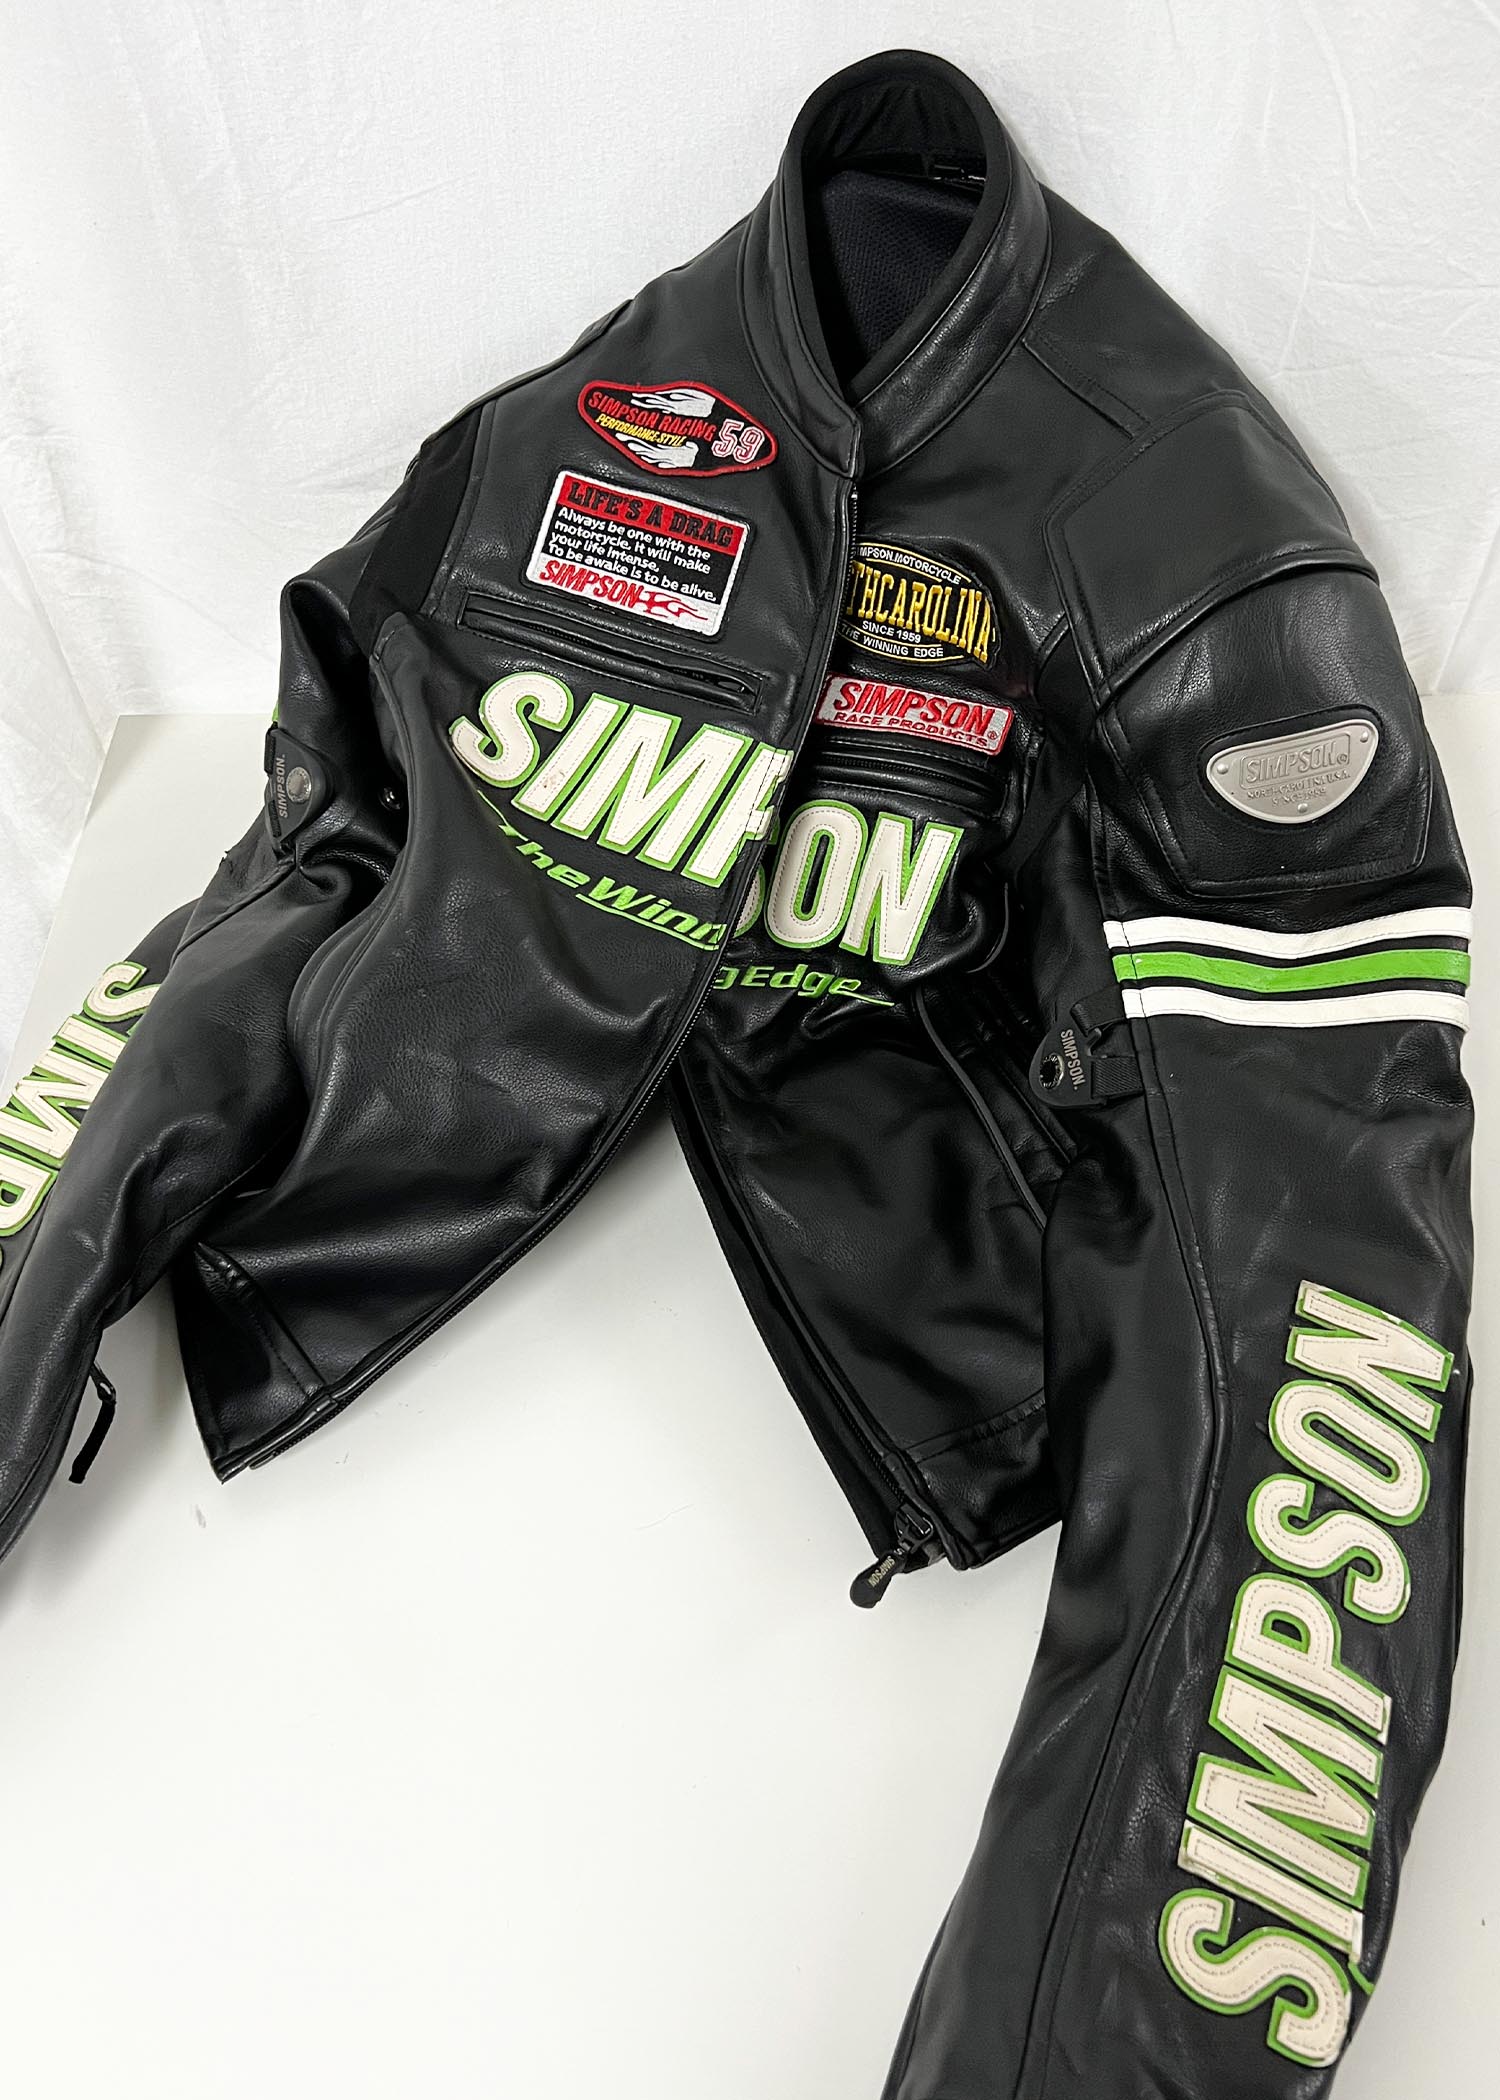 SIMPSON rider jacket